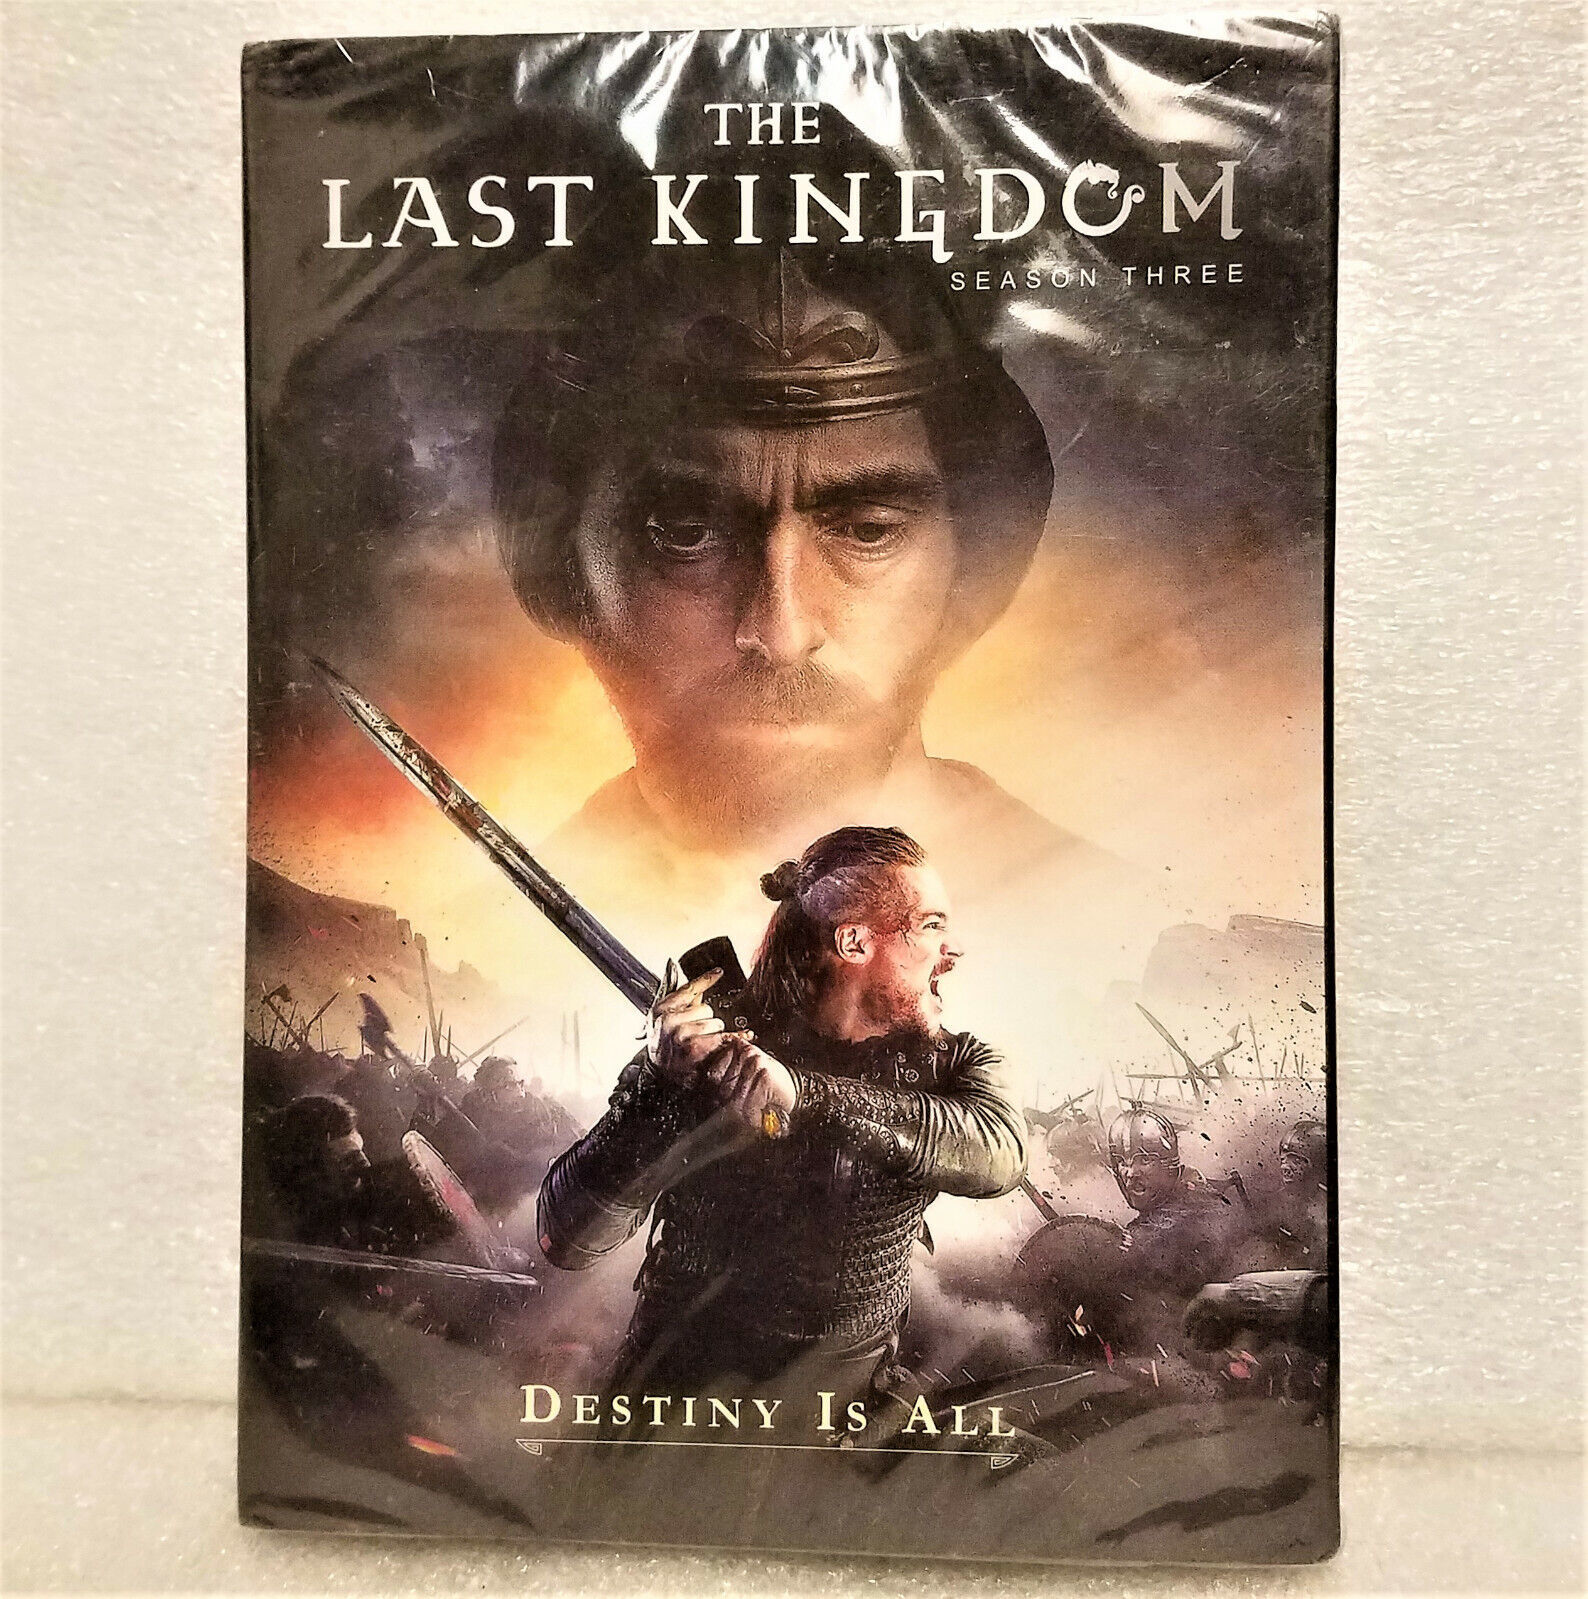 Primary image for The Last Kingdom: Season Three (DVD, 2018) NEW! Sealed!